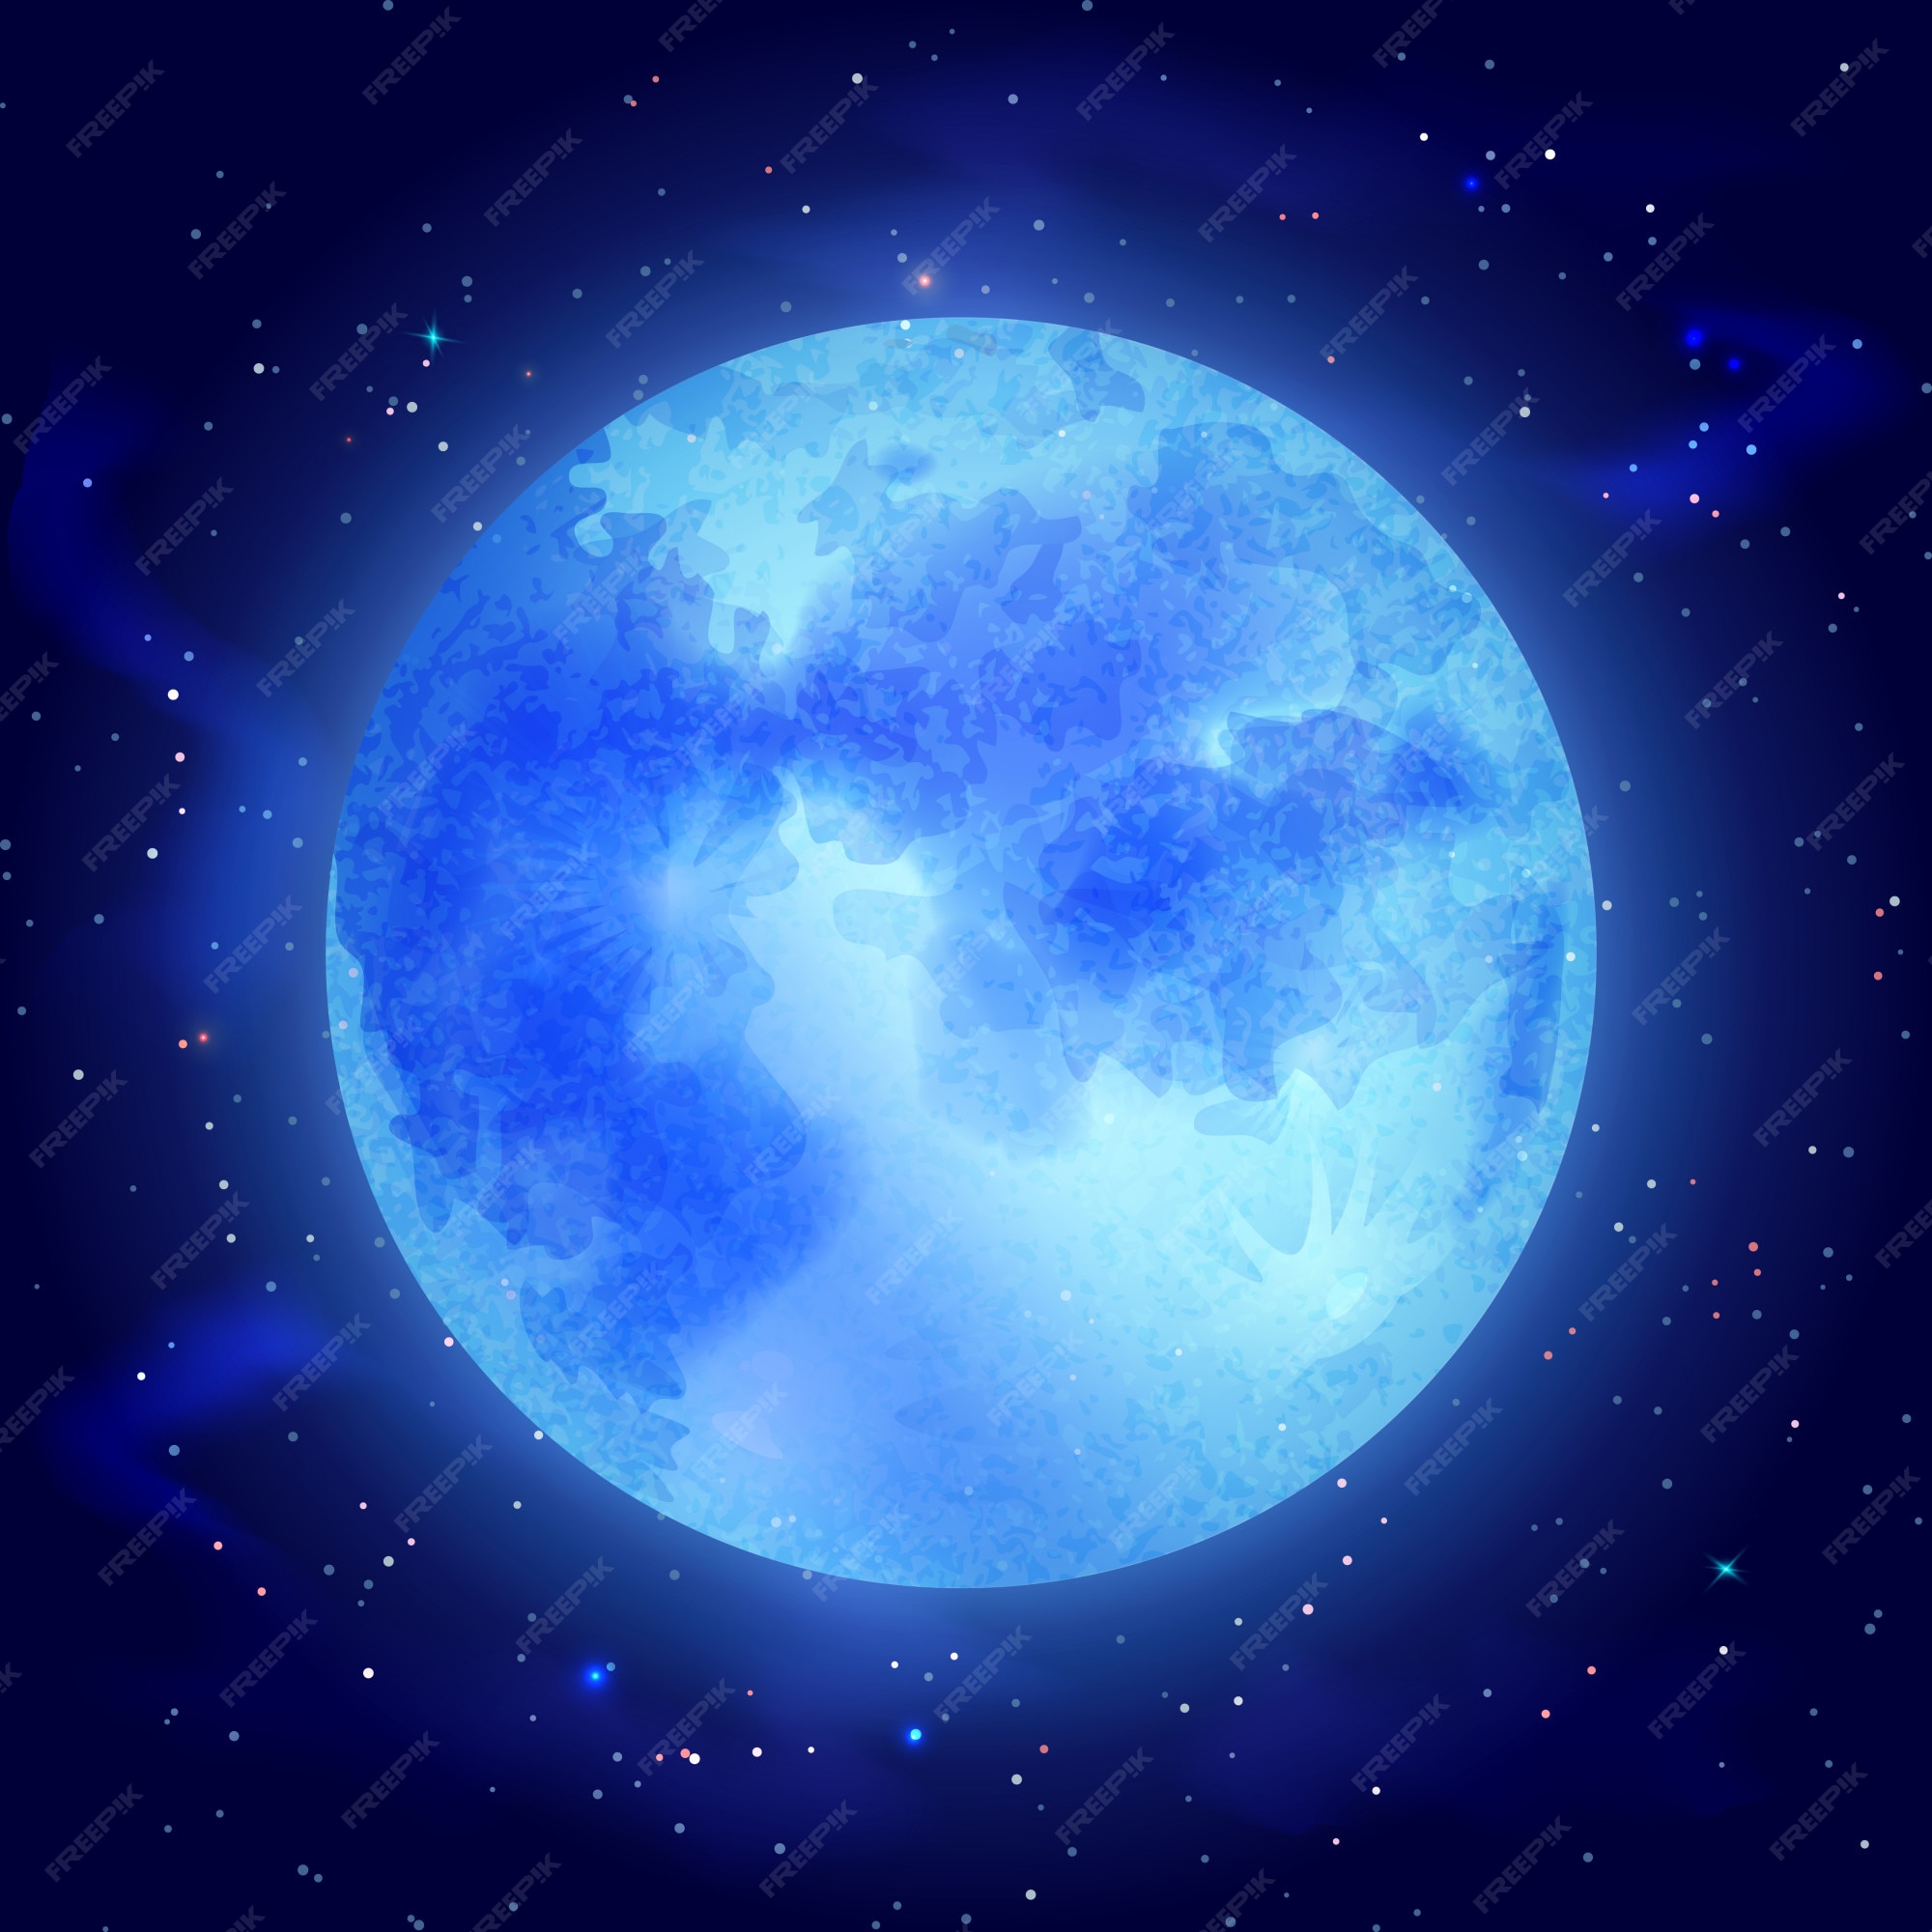 Blue Moon Images - Free Download on Freepik